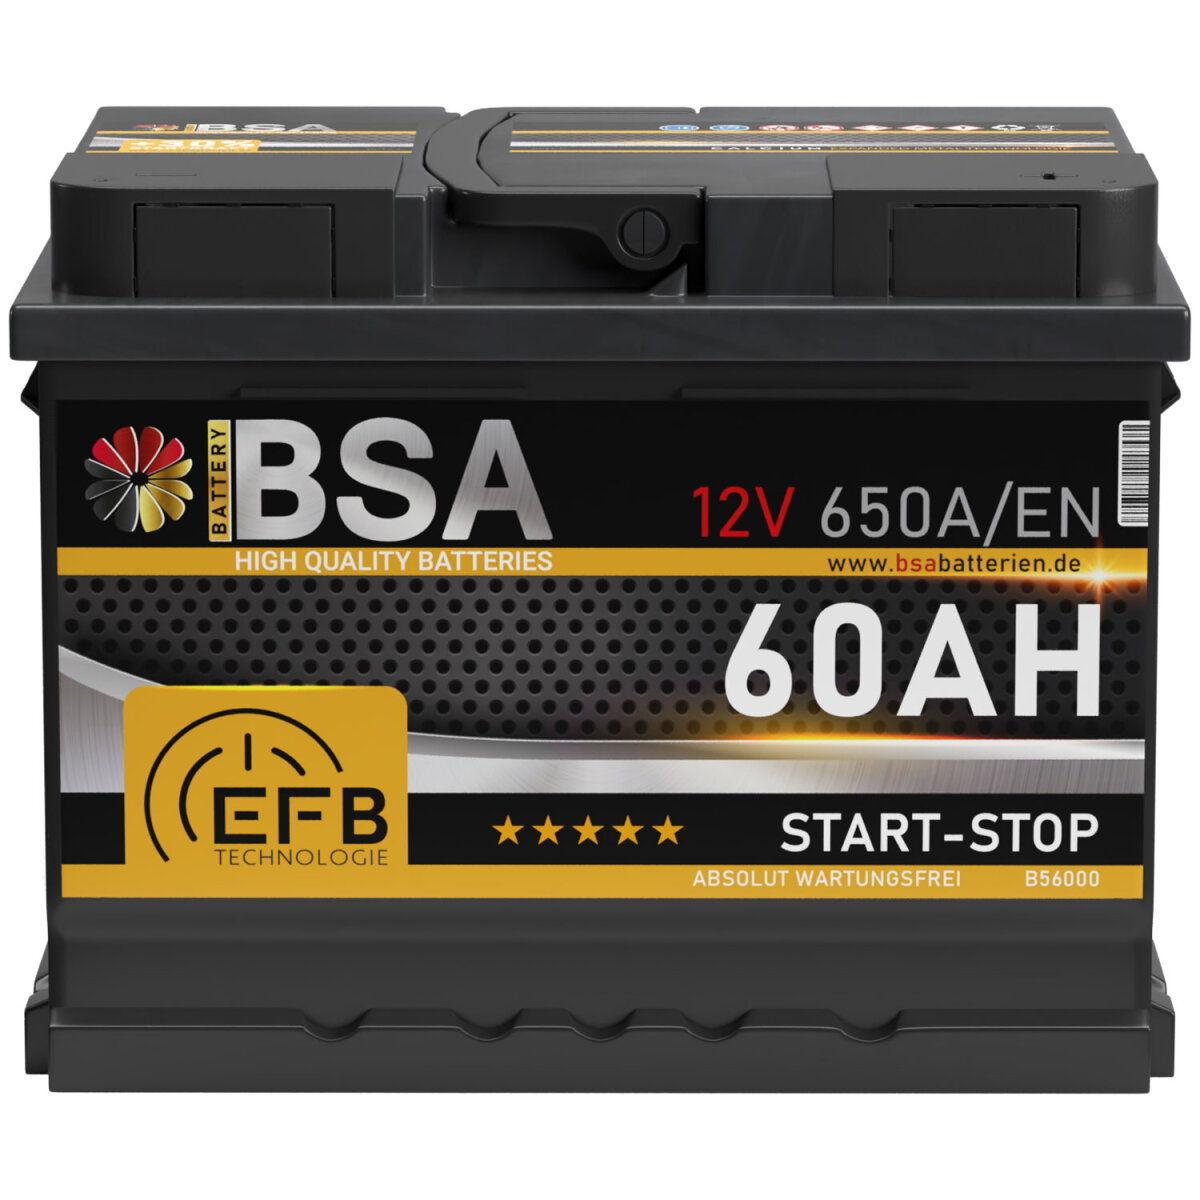 BSA Autobatterie 65Ah 12V 595A/EN +30% mehr Startkraft